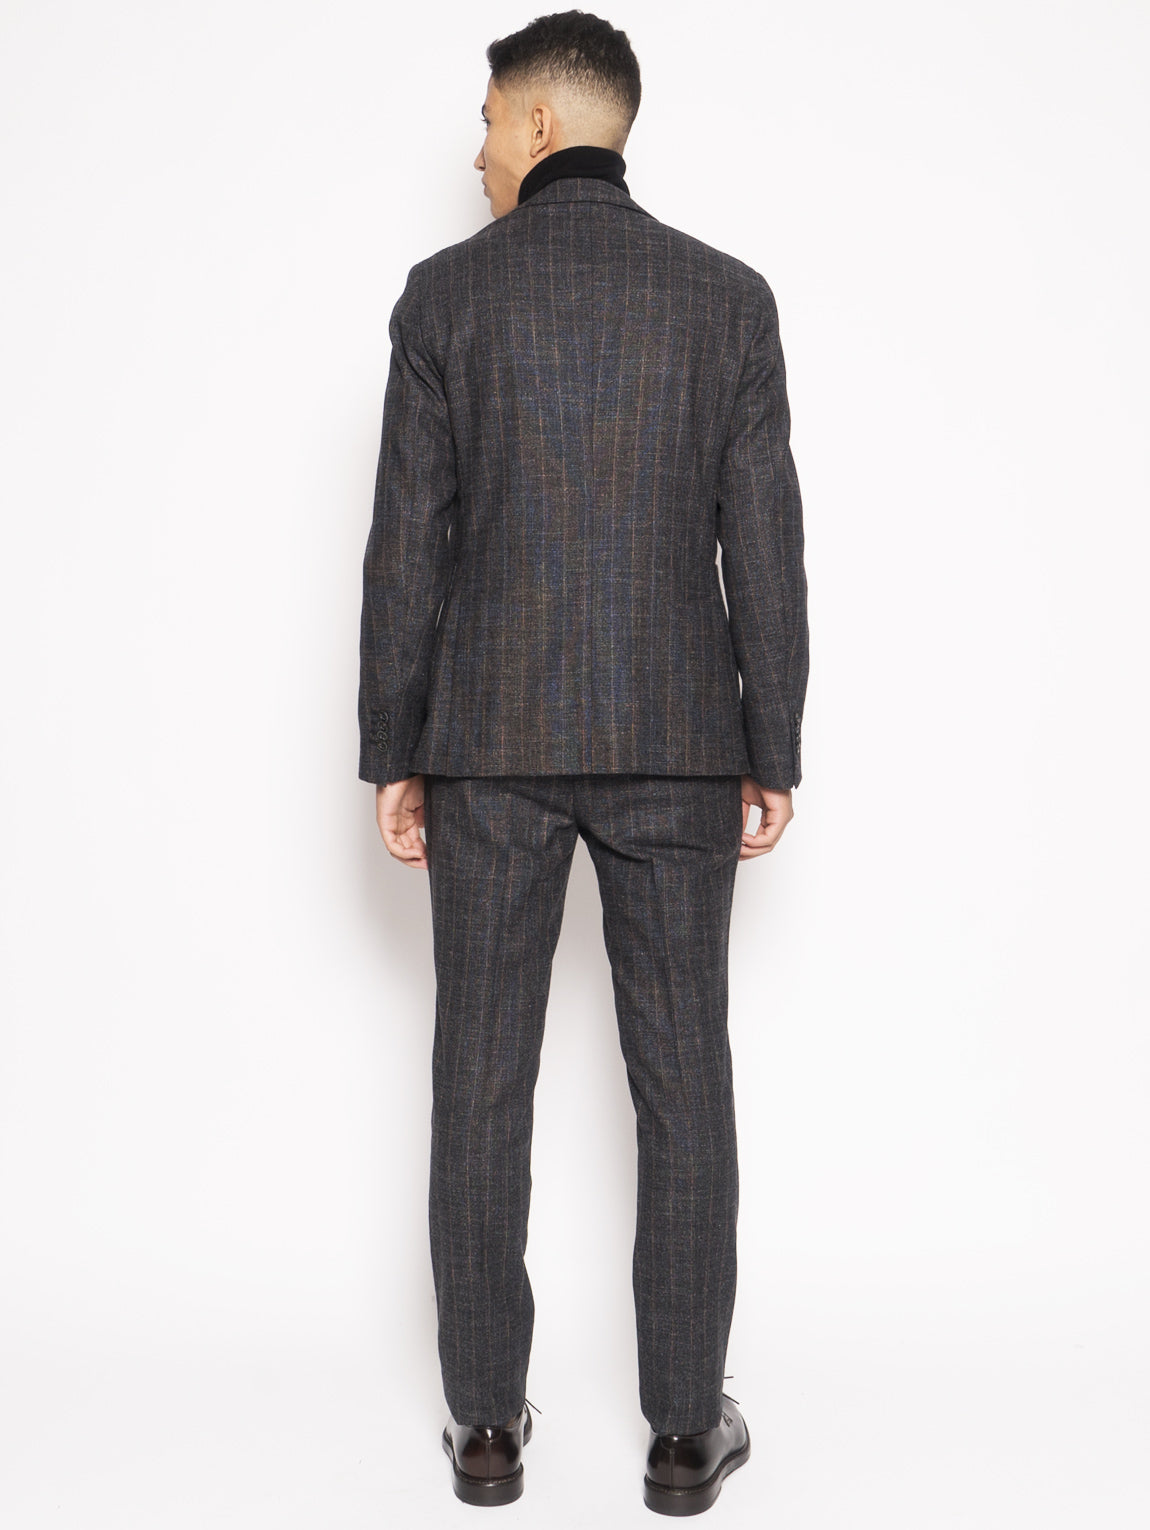 Gray wool blend pinstripe suit